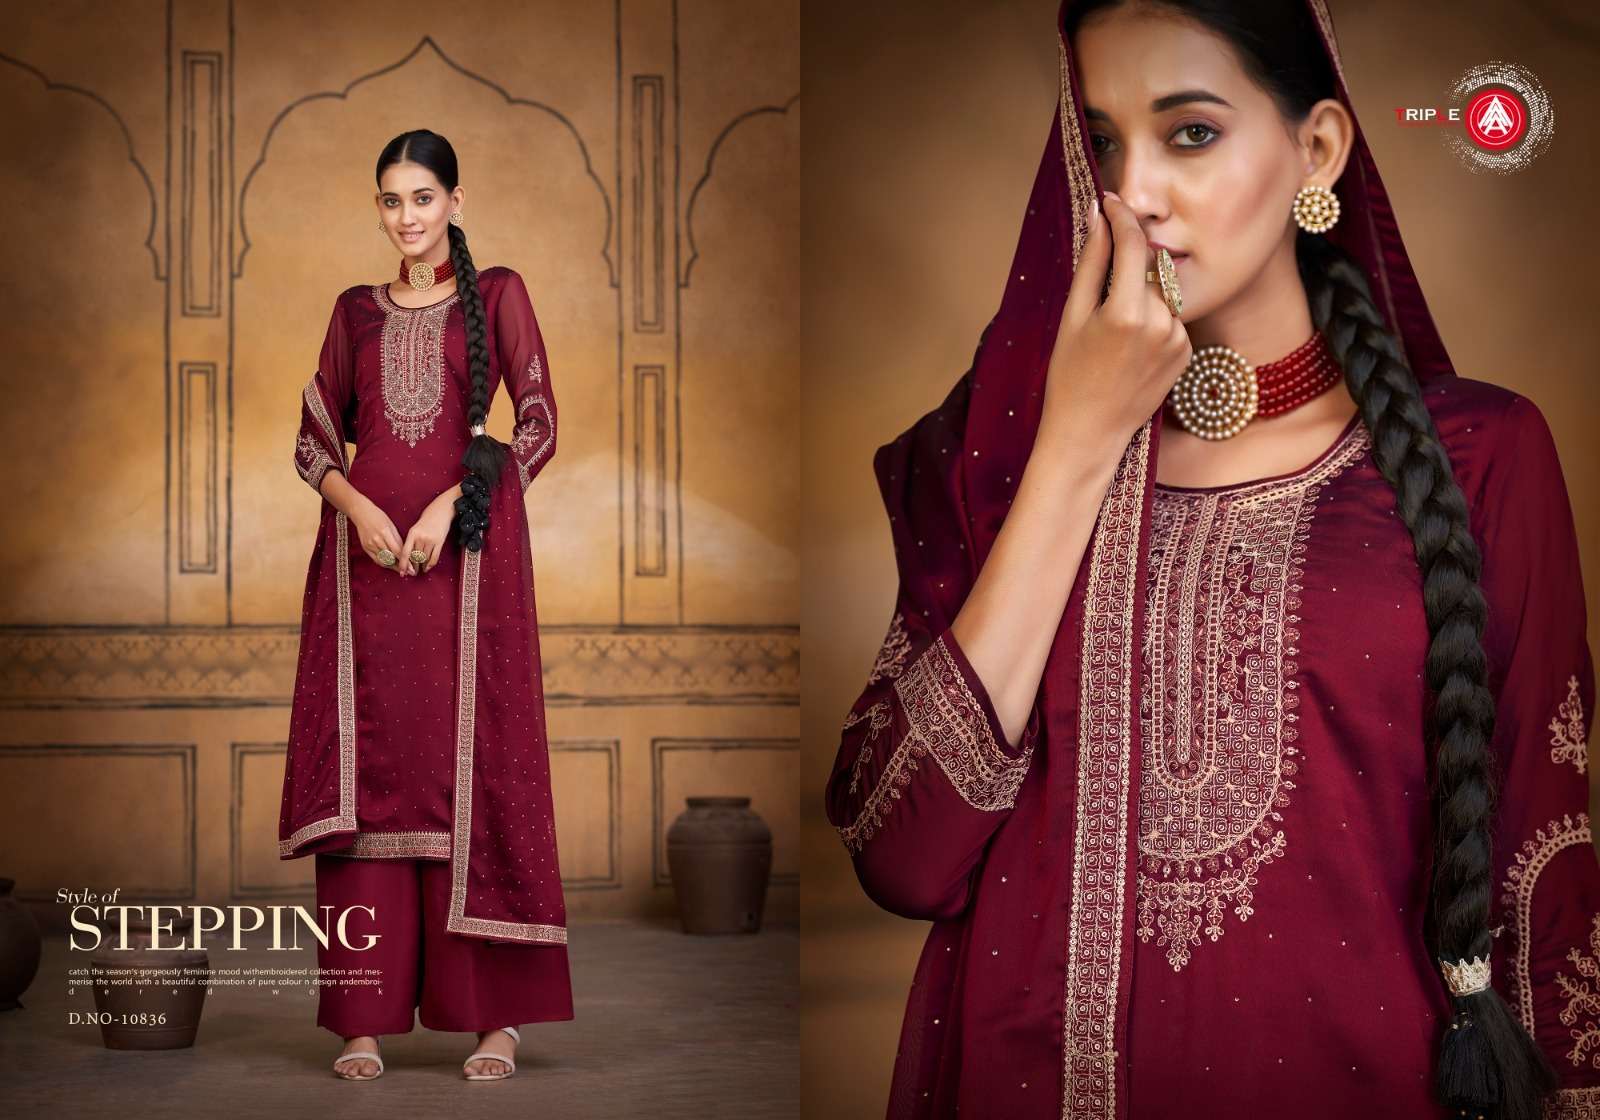 triple a lakeer 10831-10836 series designer fancy wedding wear salwar kameez wholesaler surat gujarat